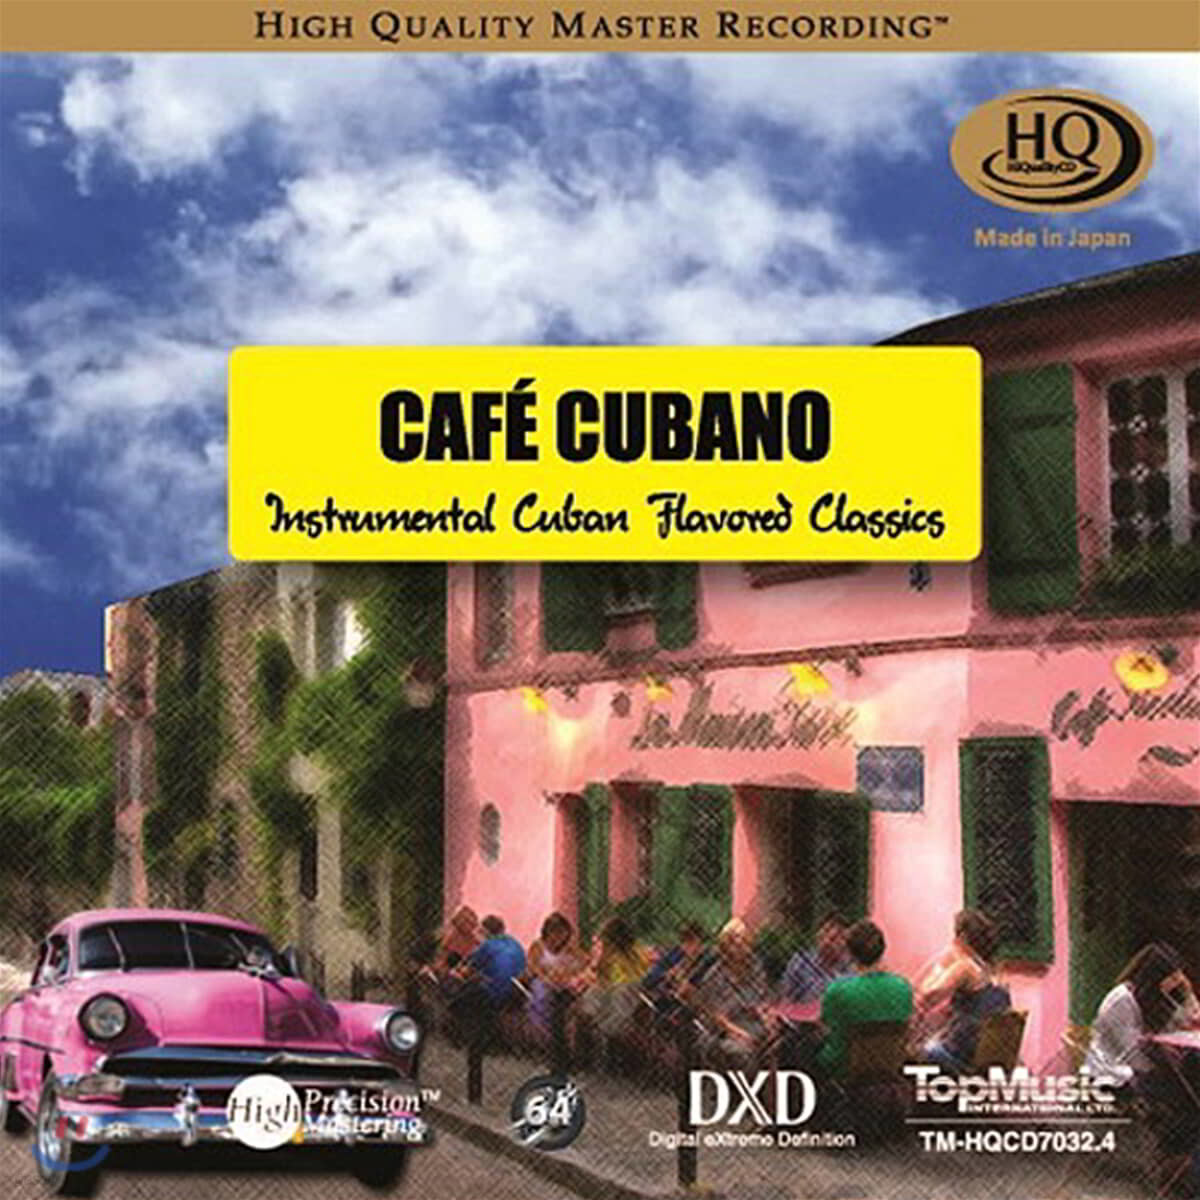 Jeff Steinberg &amp; Friends (제프 스타인버그 앤 프렌즈) - Cafe Cubano